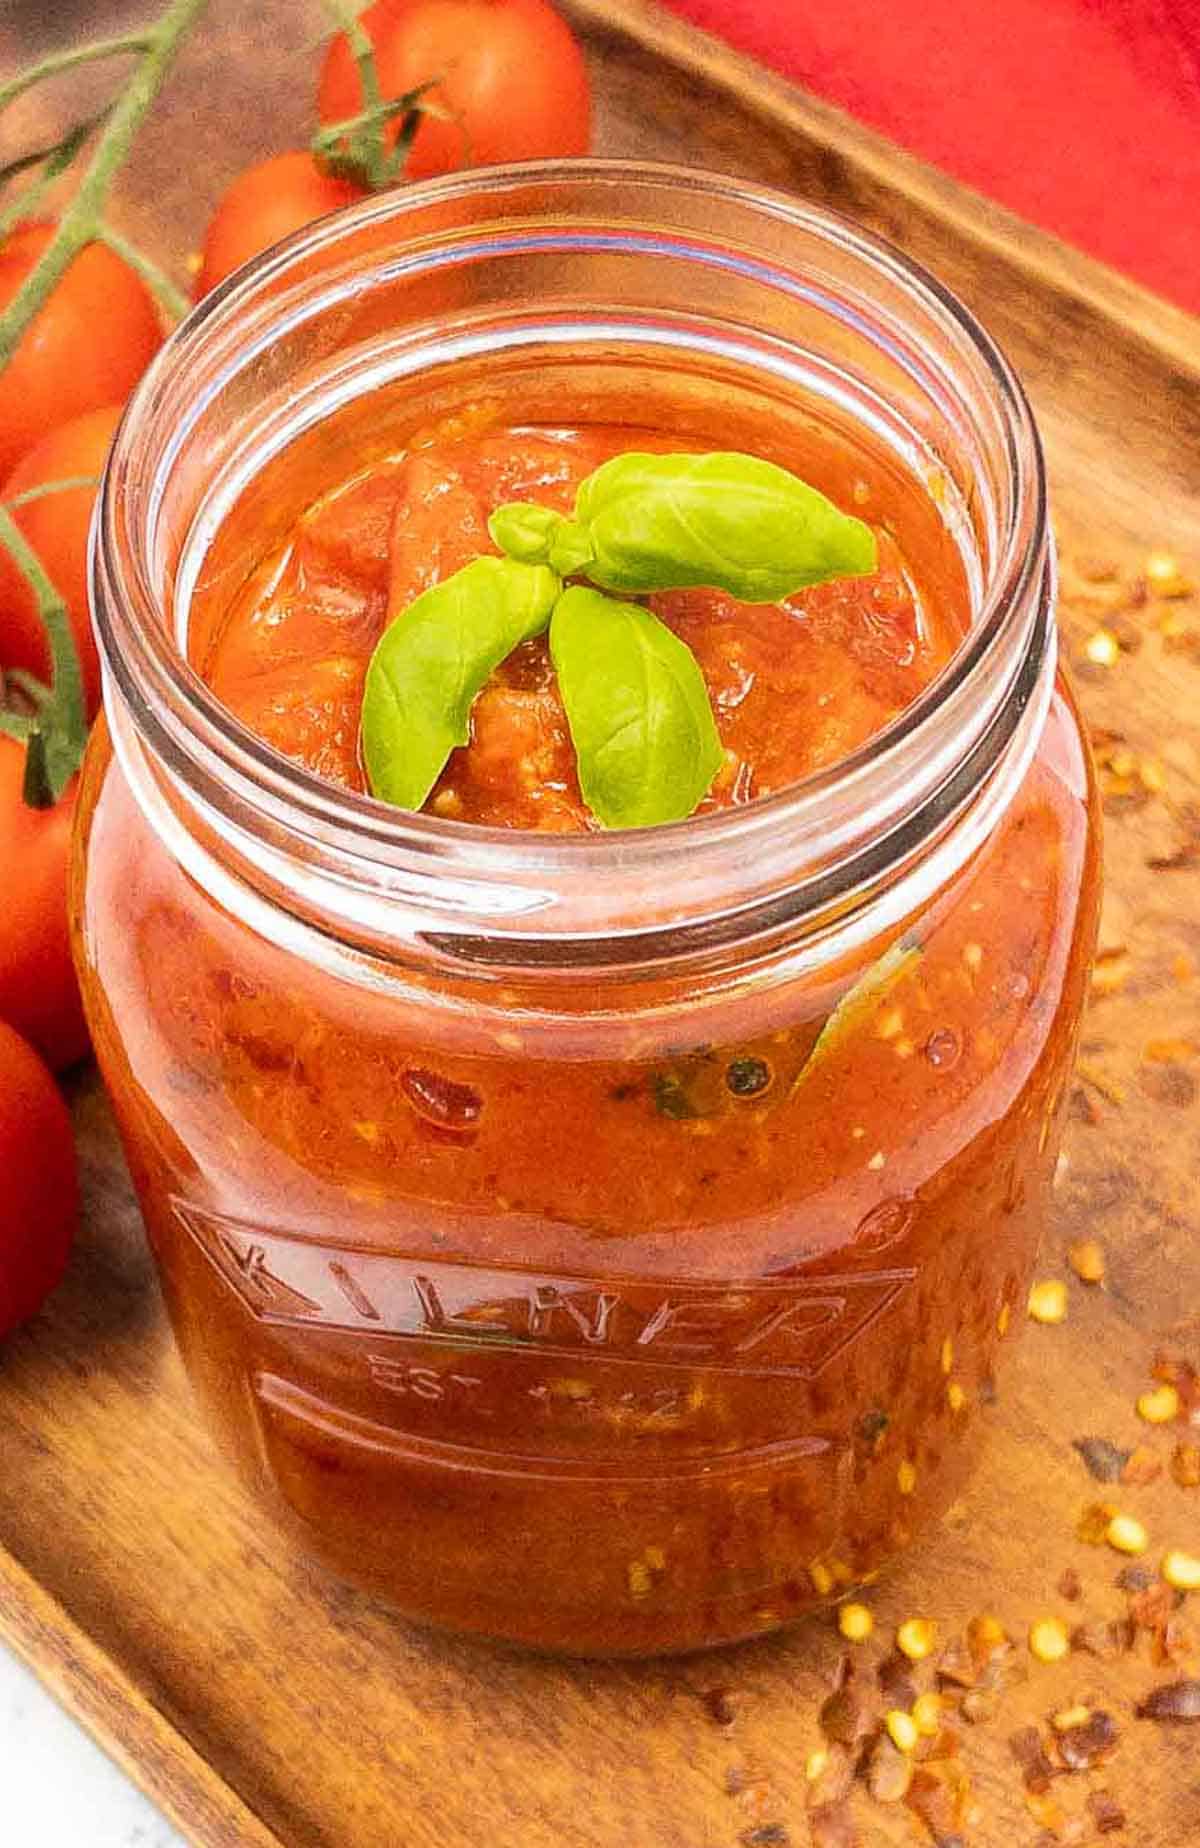 Homemade arrabiata sauce in a jar.